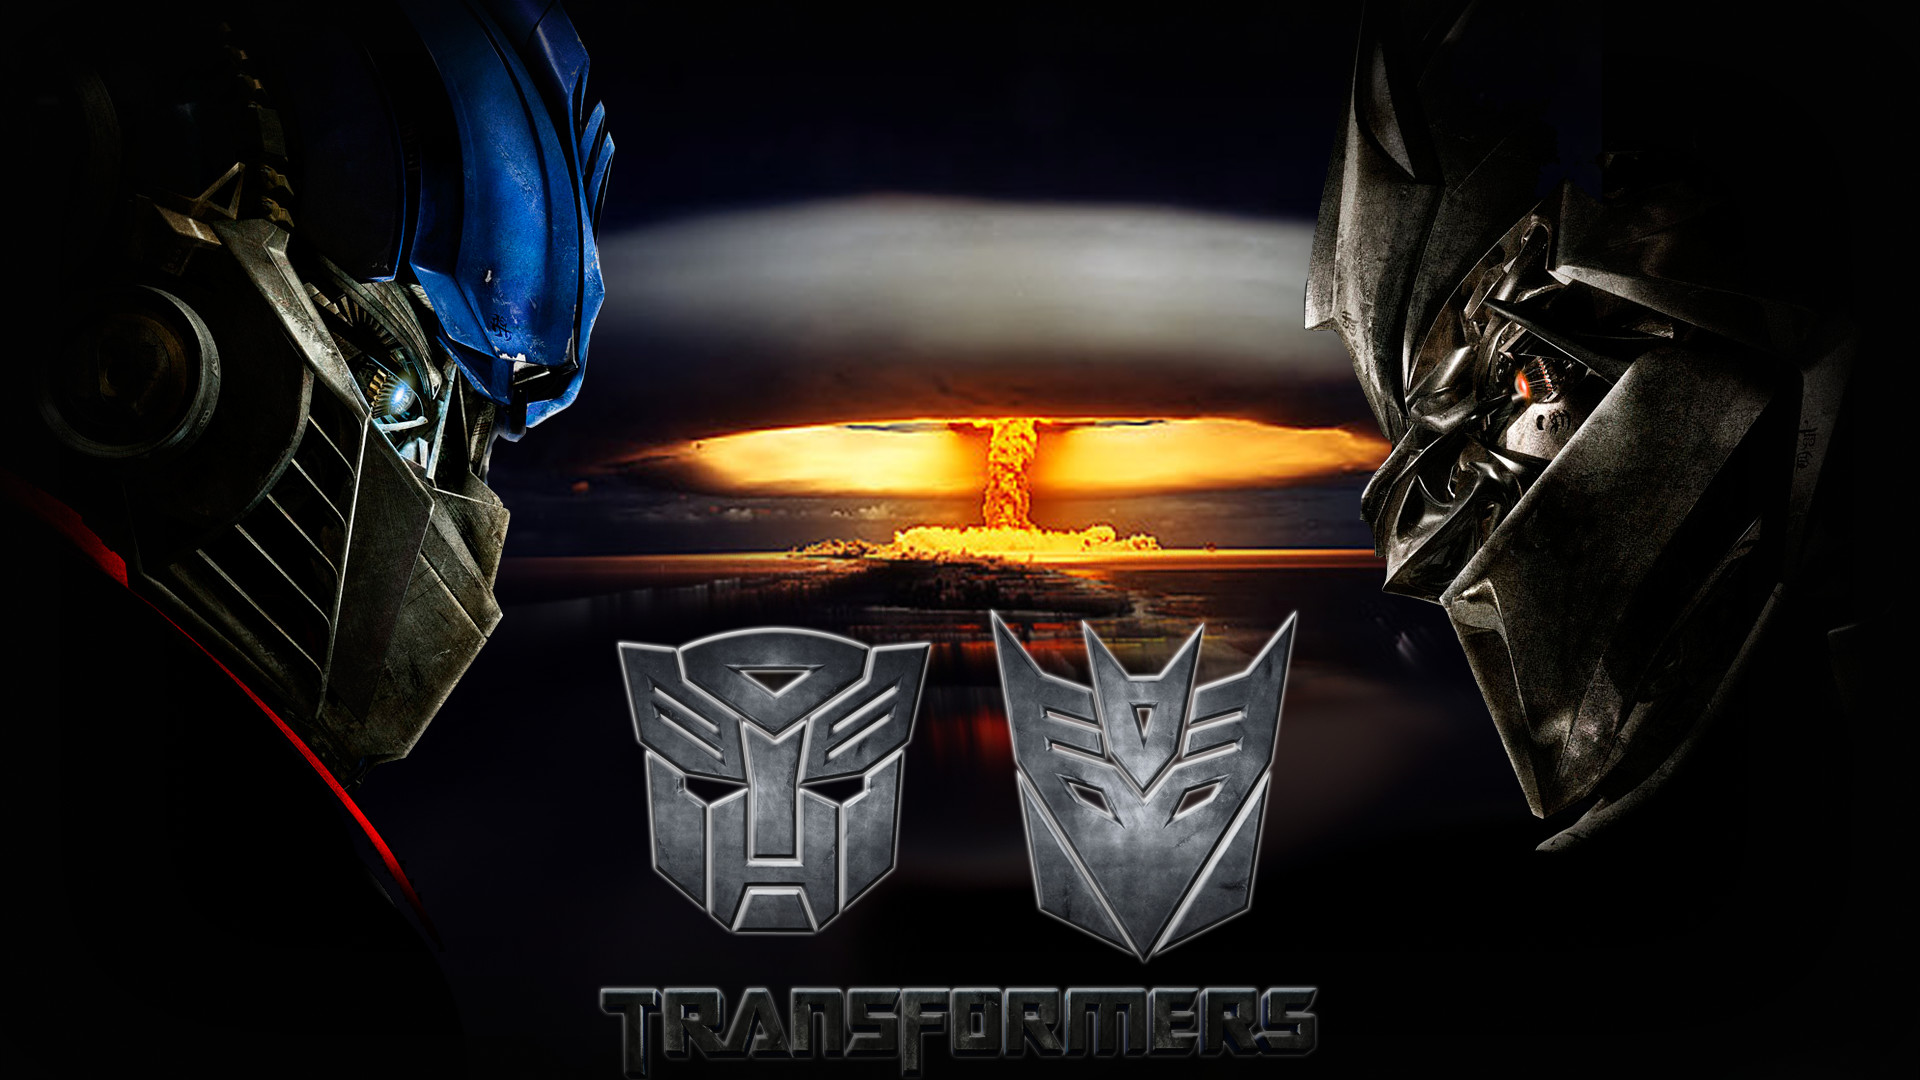 1920x1080 ... Transformers 4 Movie Poster - wallpaper.